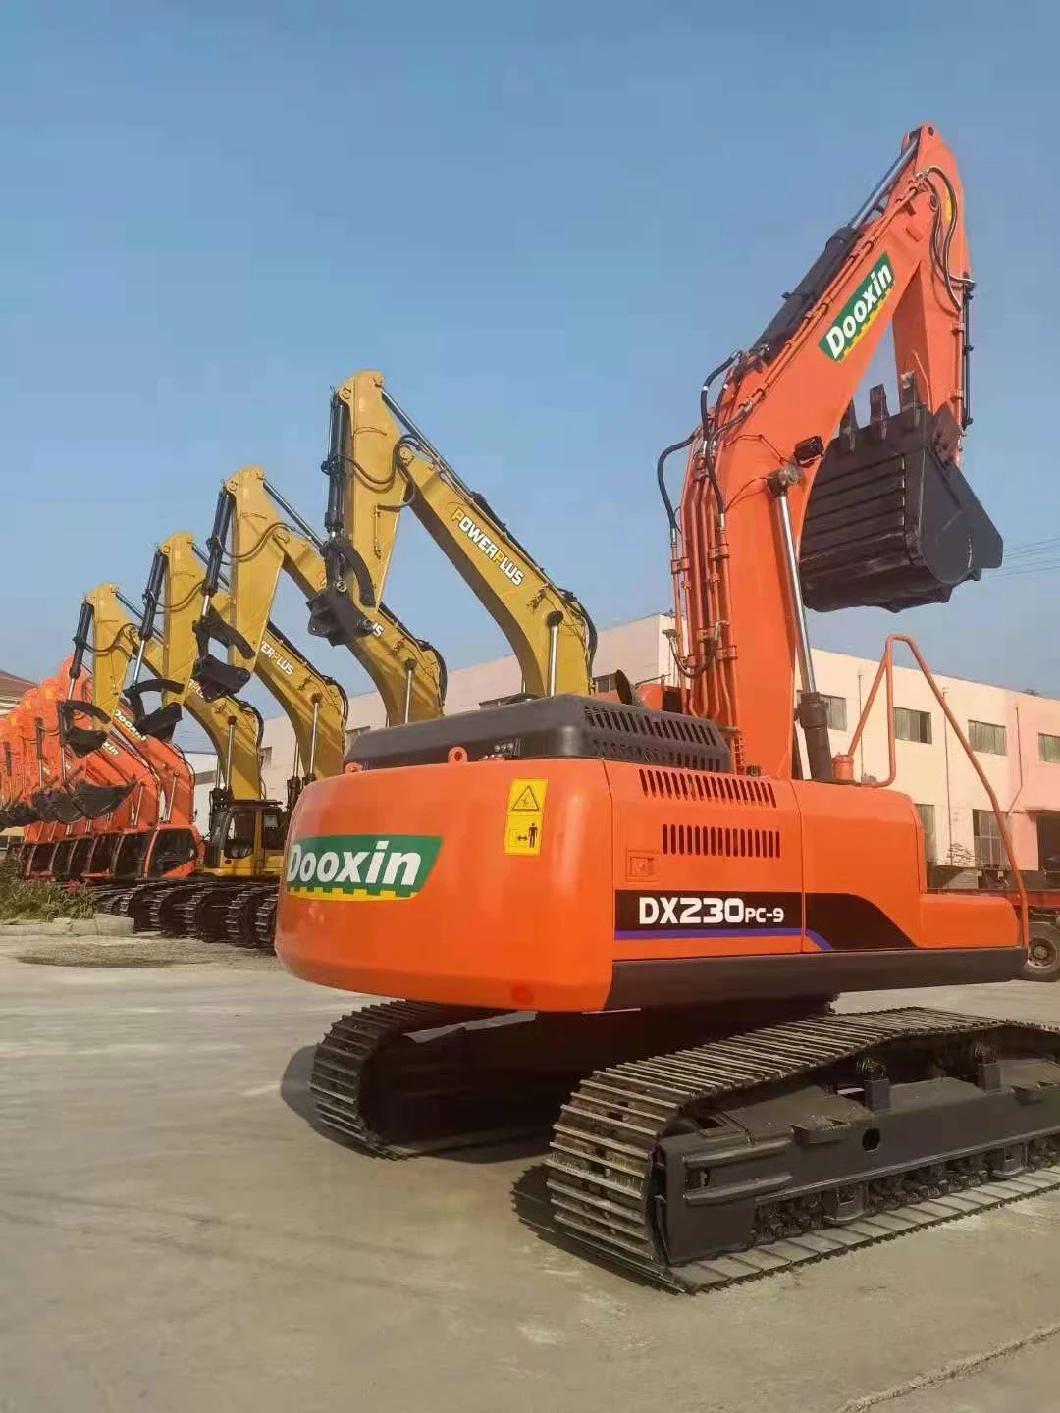 China 30tons Crawler Excavator Dx300 Digger for Sale